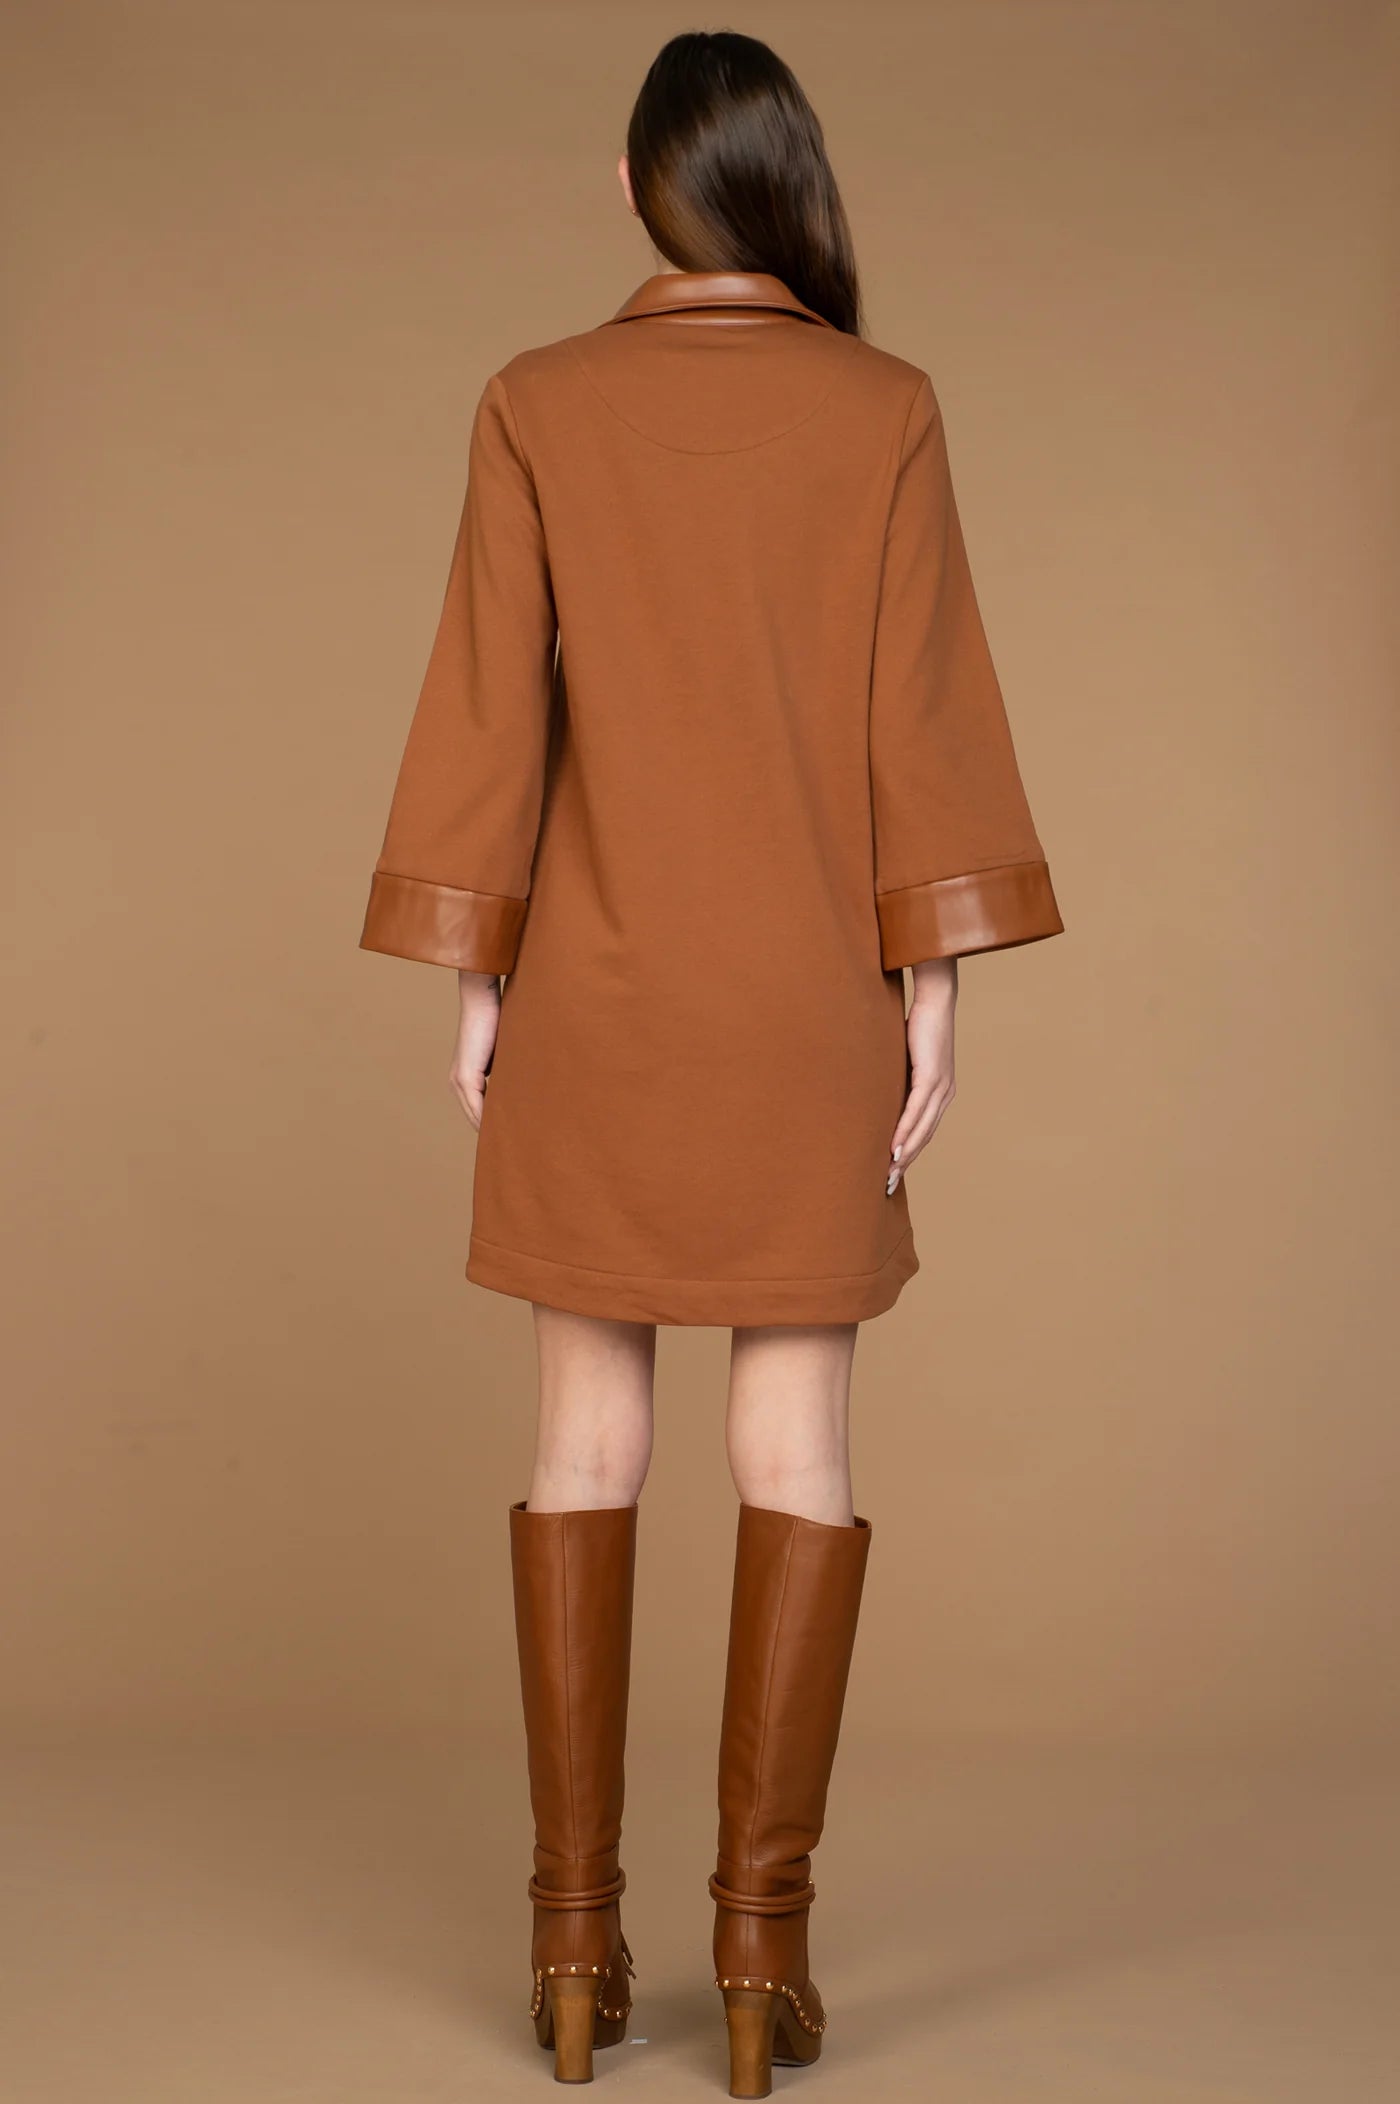 Taylor Dress-Chocolate Knit